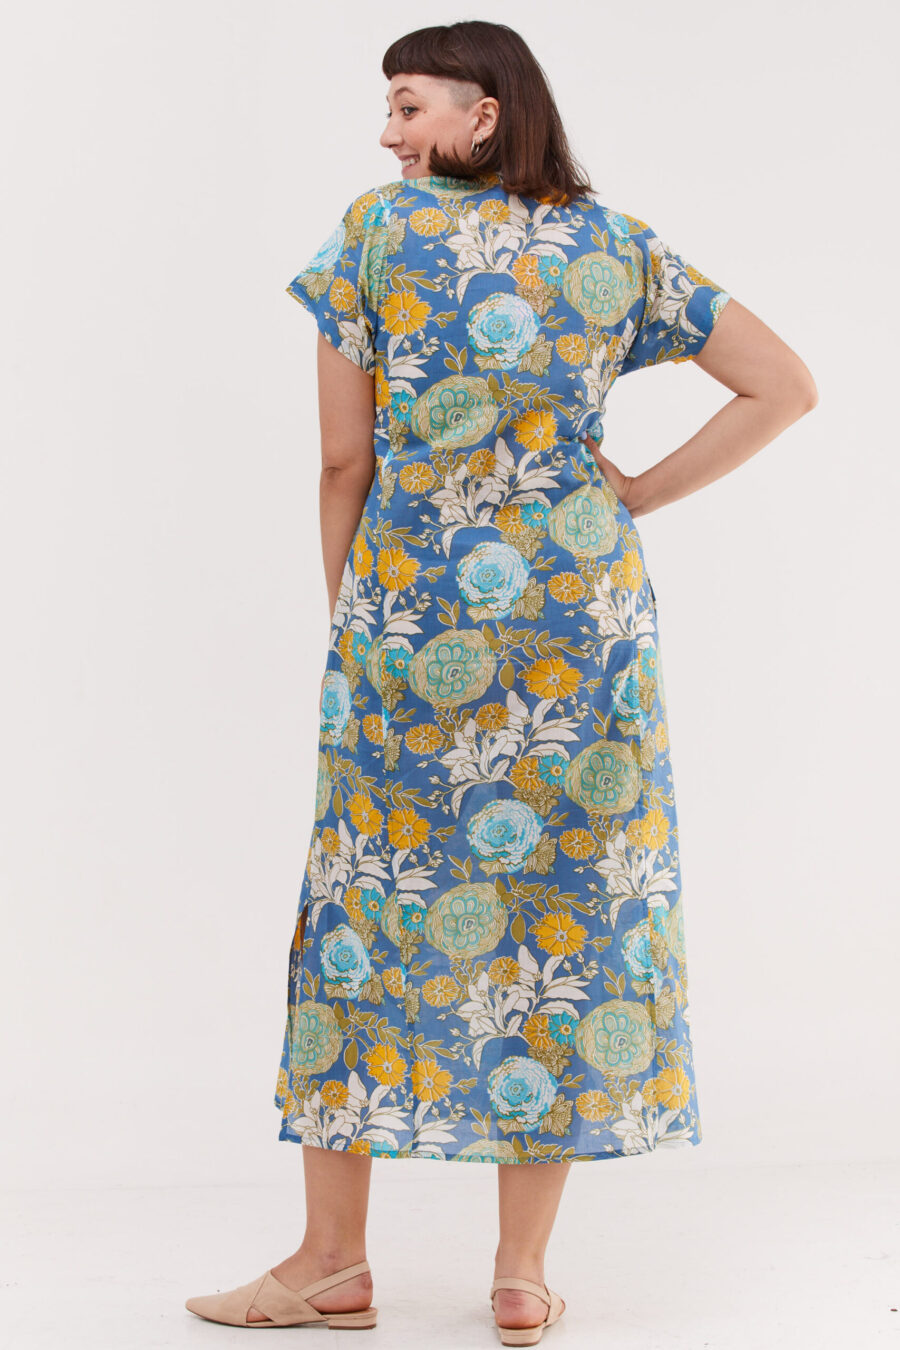 Jalabiya dress | Uniquely designed dress - Blue blossom, colorful floral print on a blue dress by comfort zone boutique